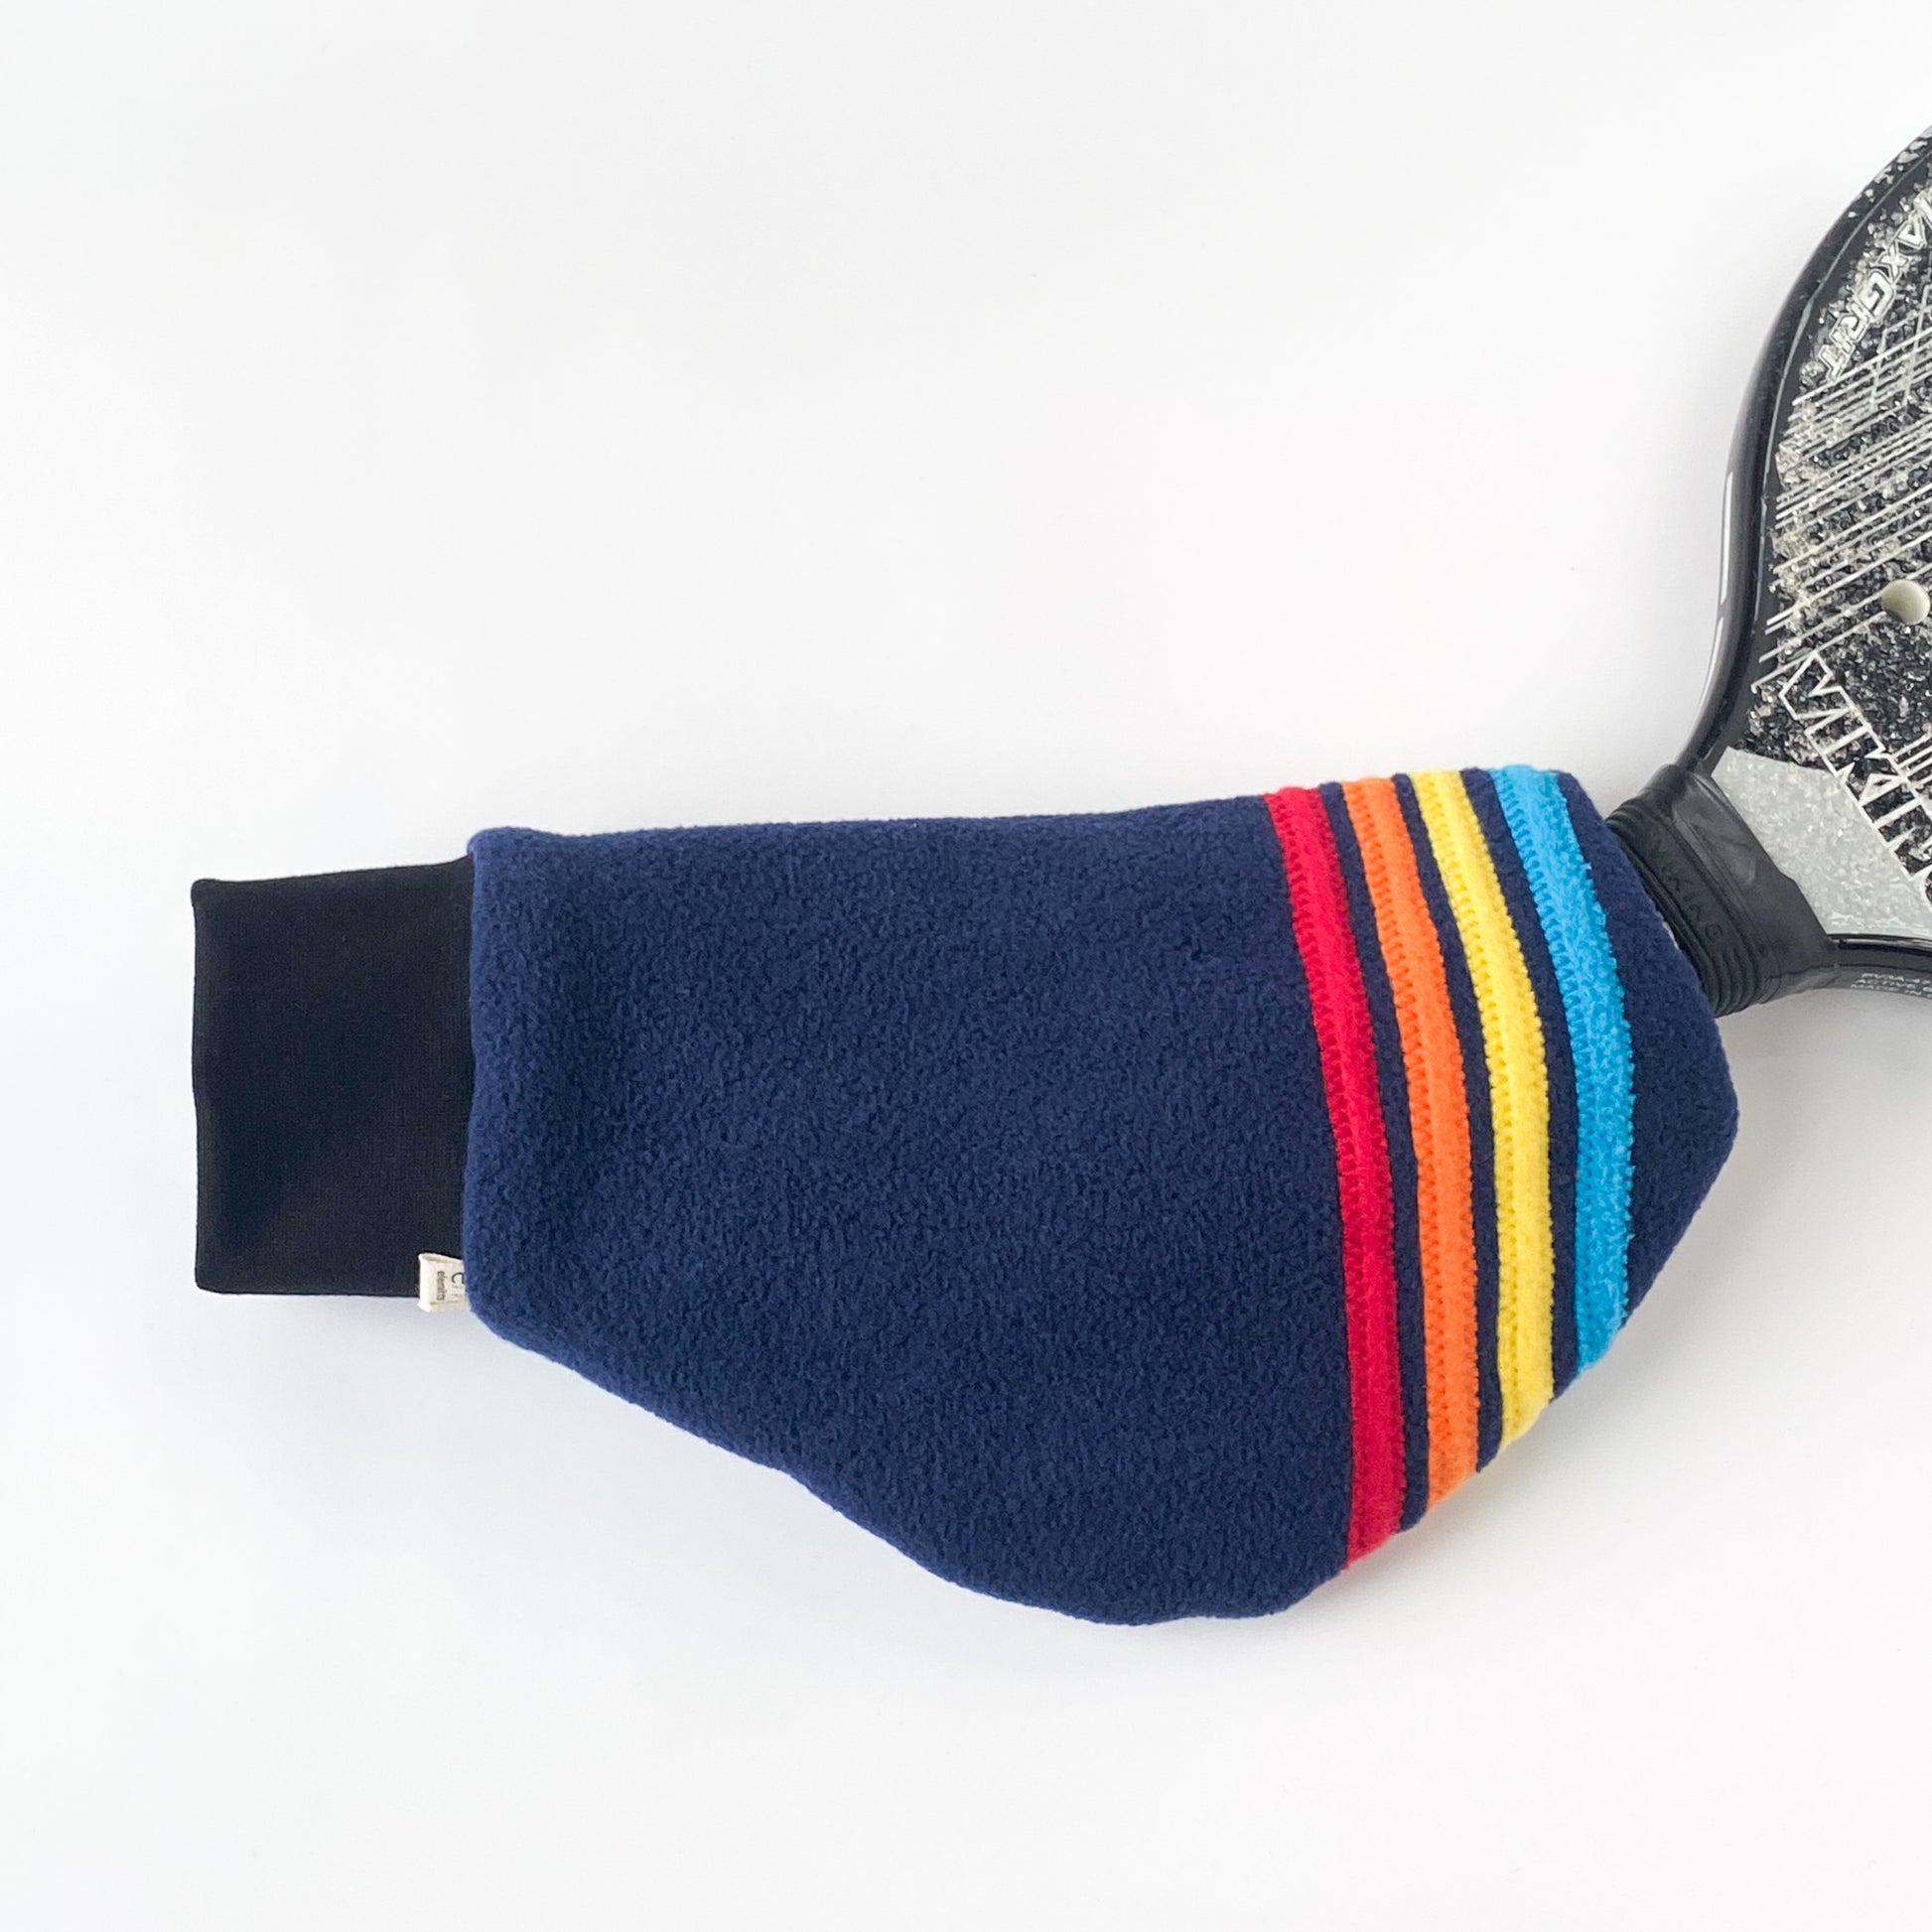 the rainbow paddle tennis mitt. platform tennis mitt.  paddle tennis glove. platform tennis glove.